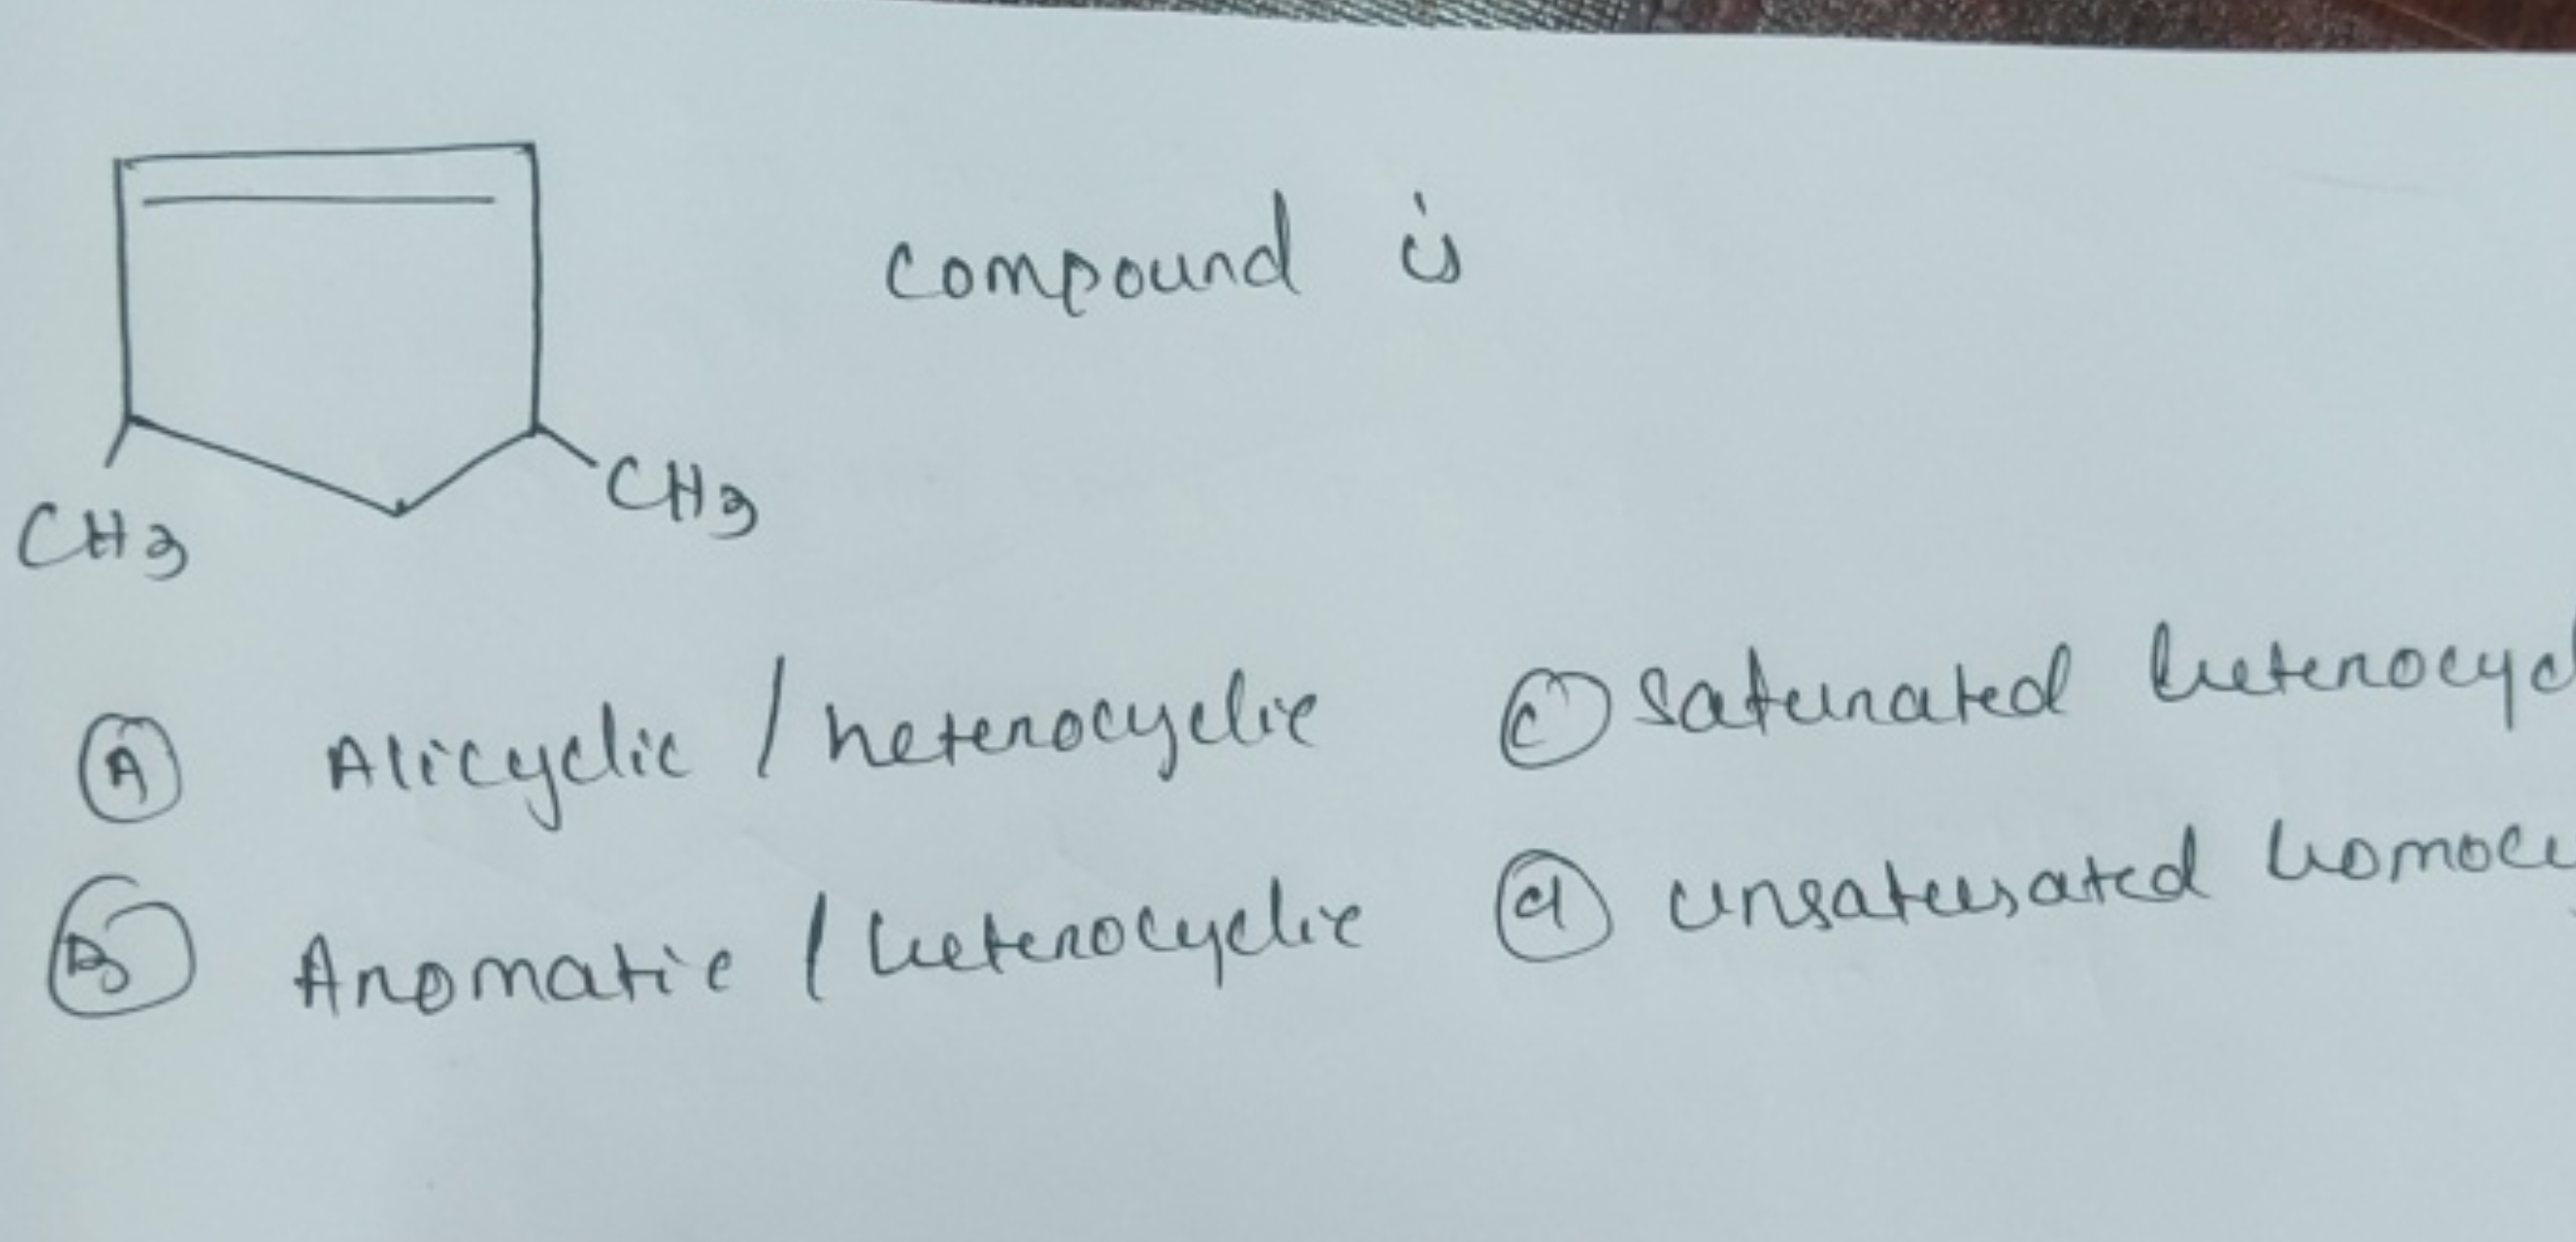 CC1C=CC(C)C1 compound is